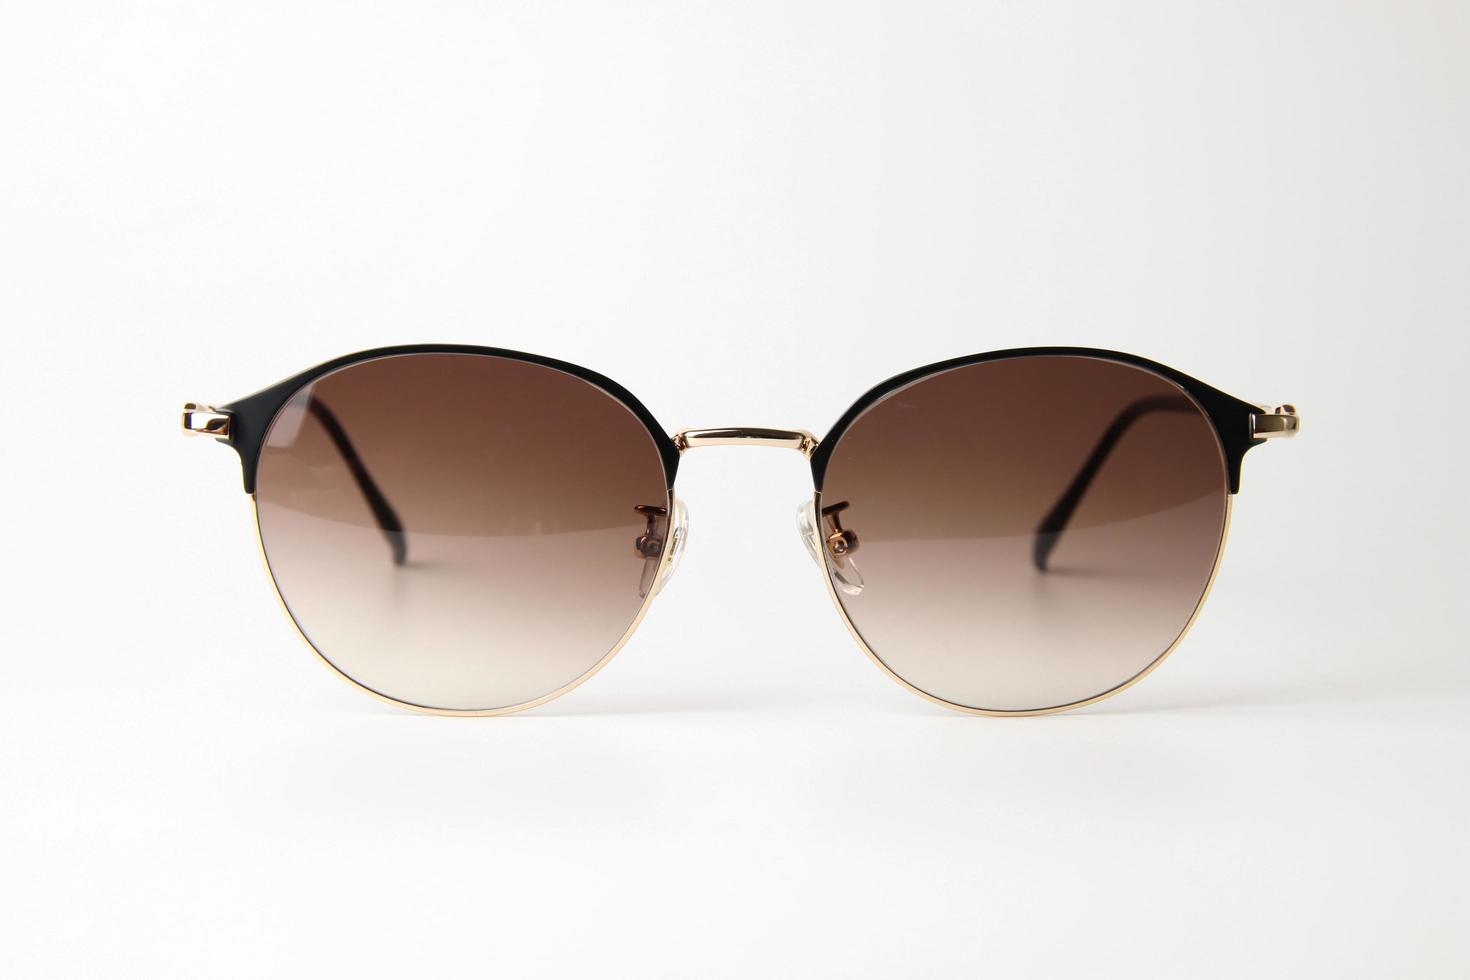 Sunglasses on white background photo